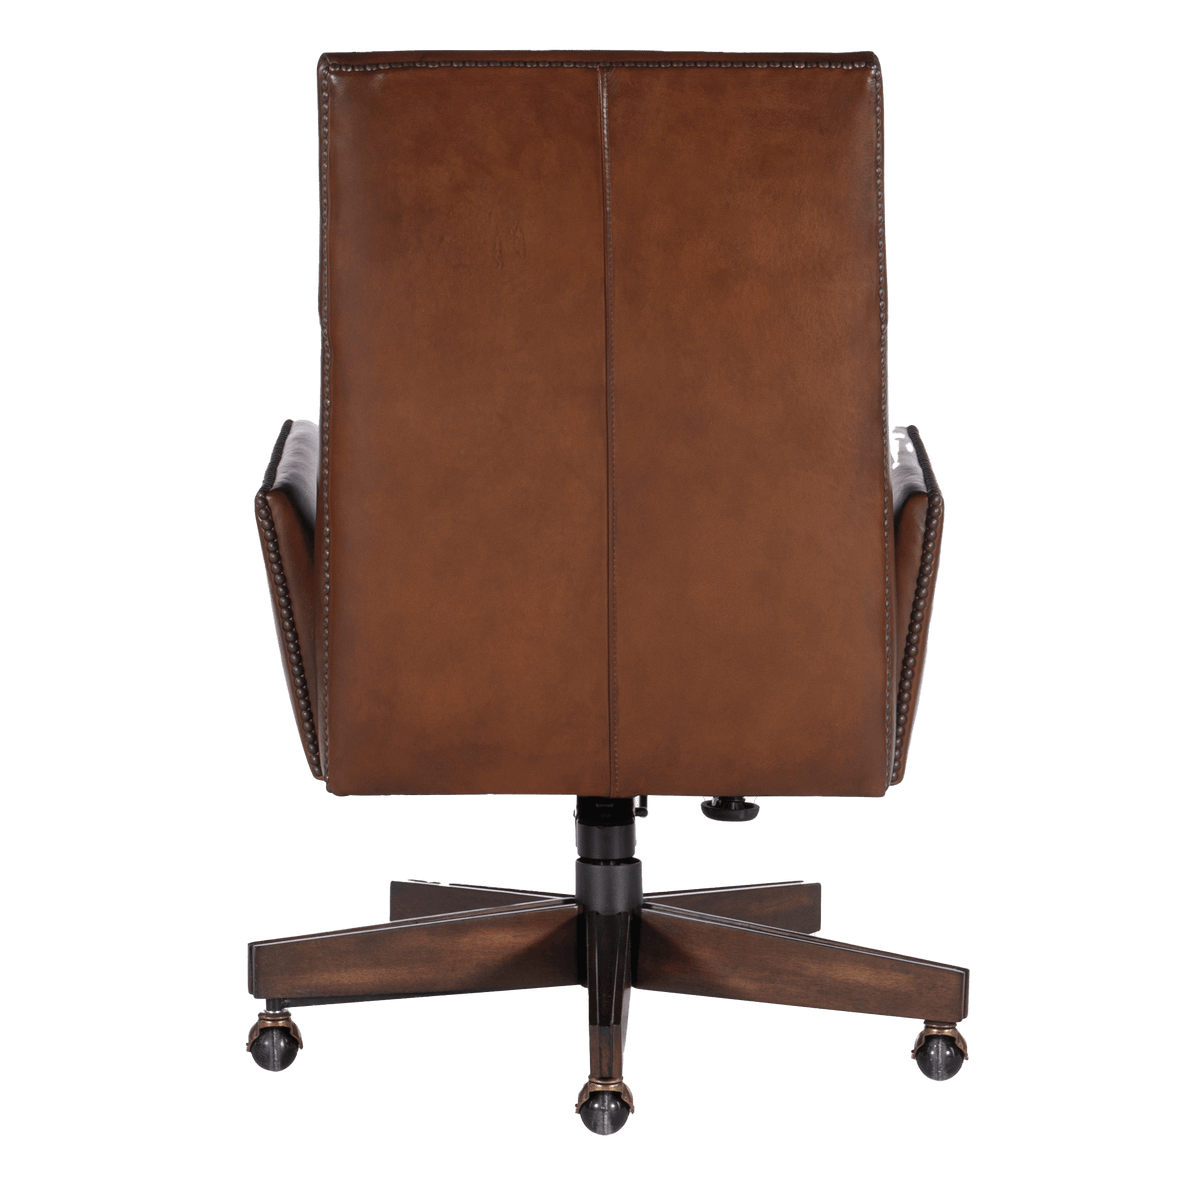 Gabbriel Leather Office Chair, Brown - Coja